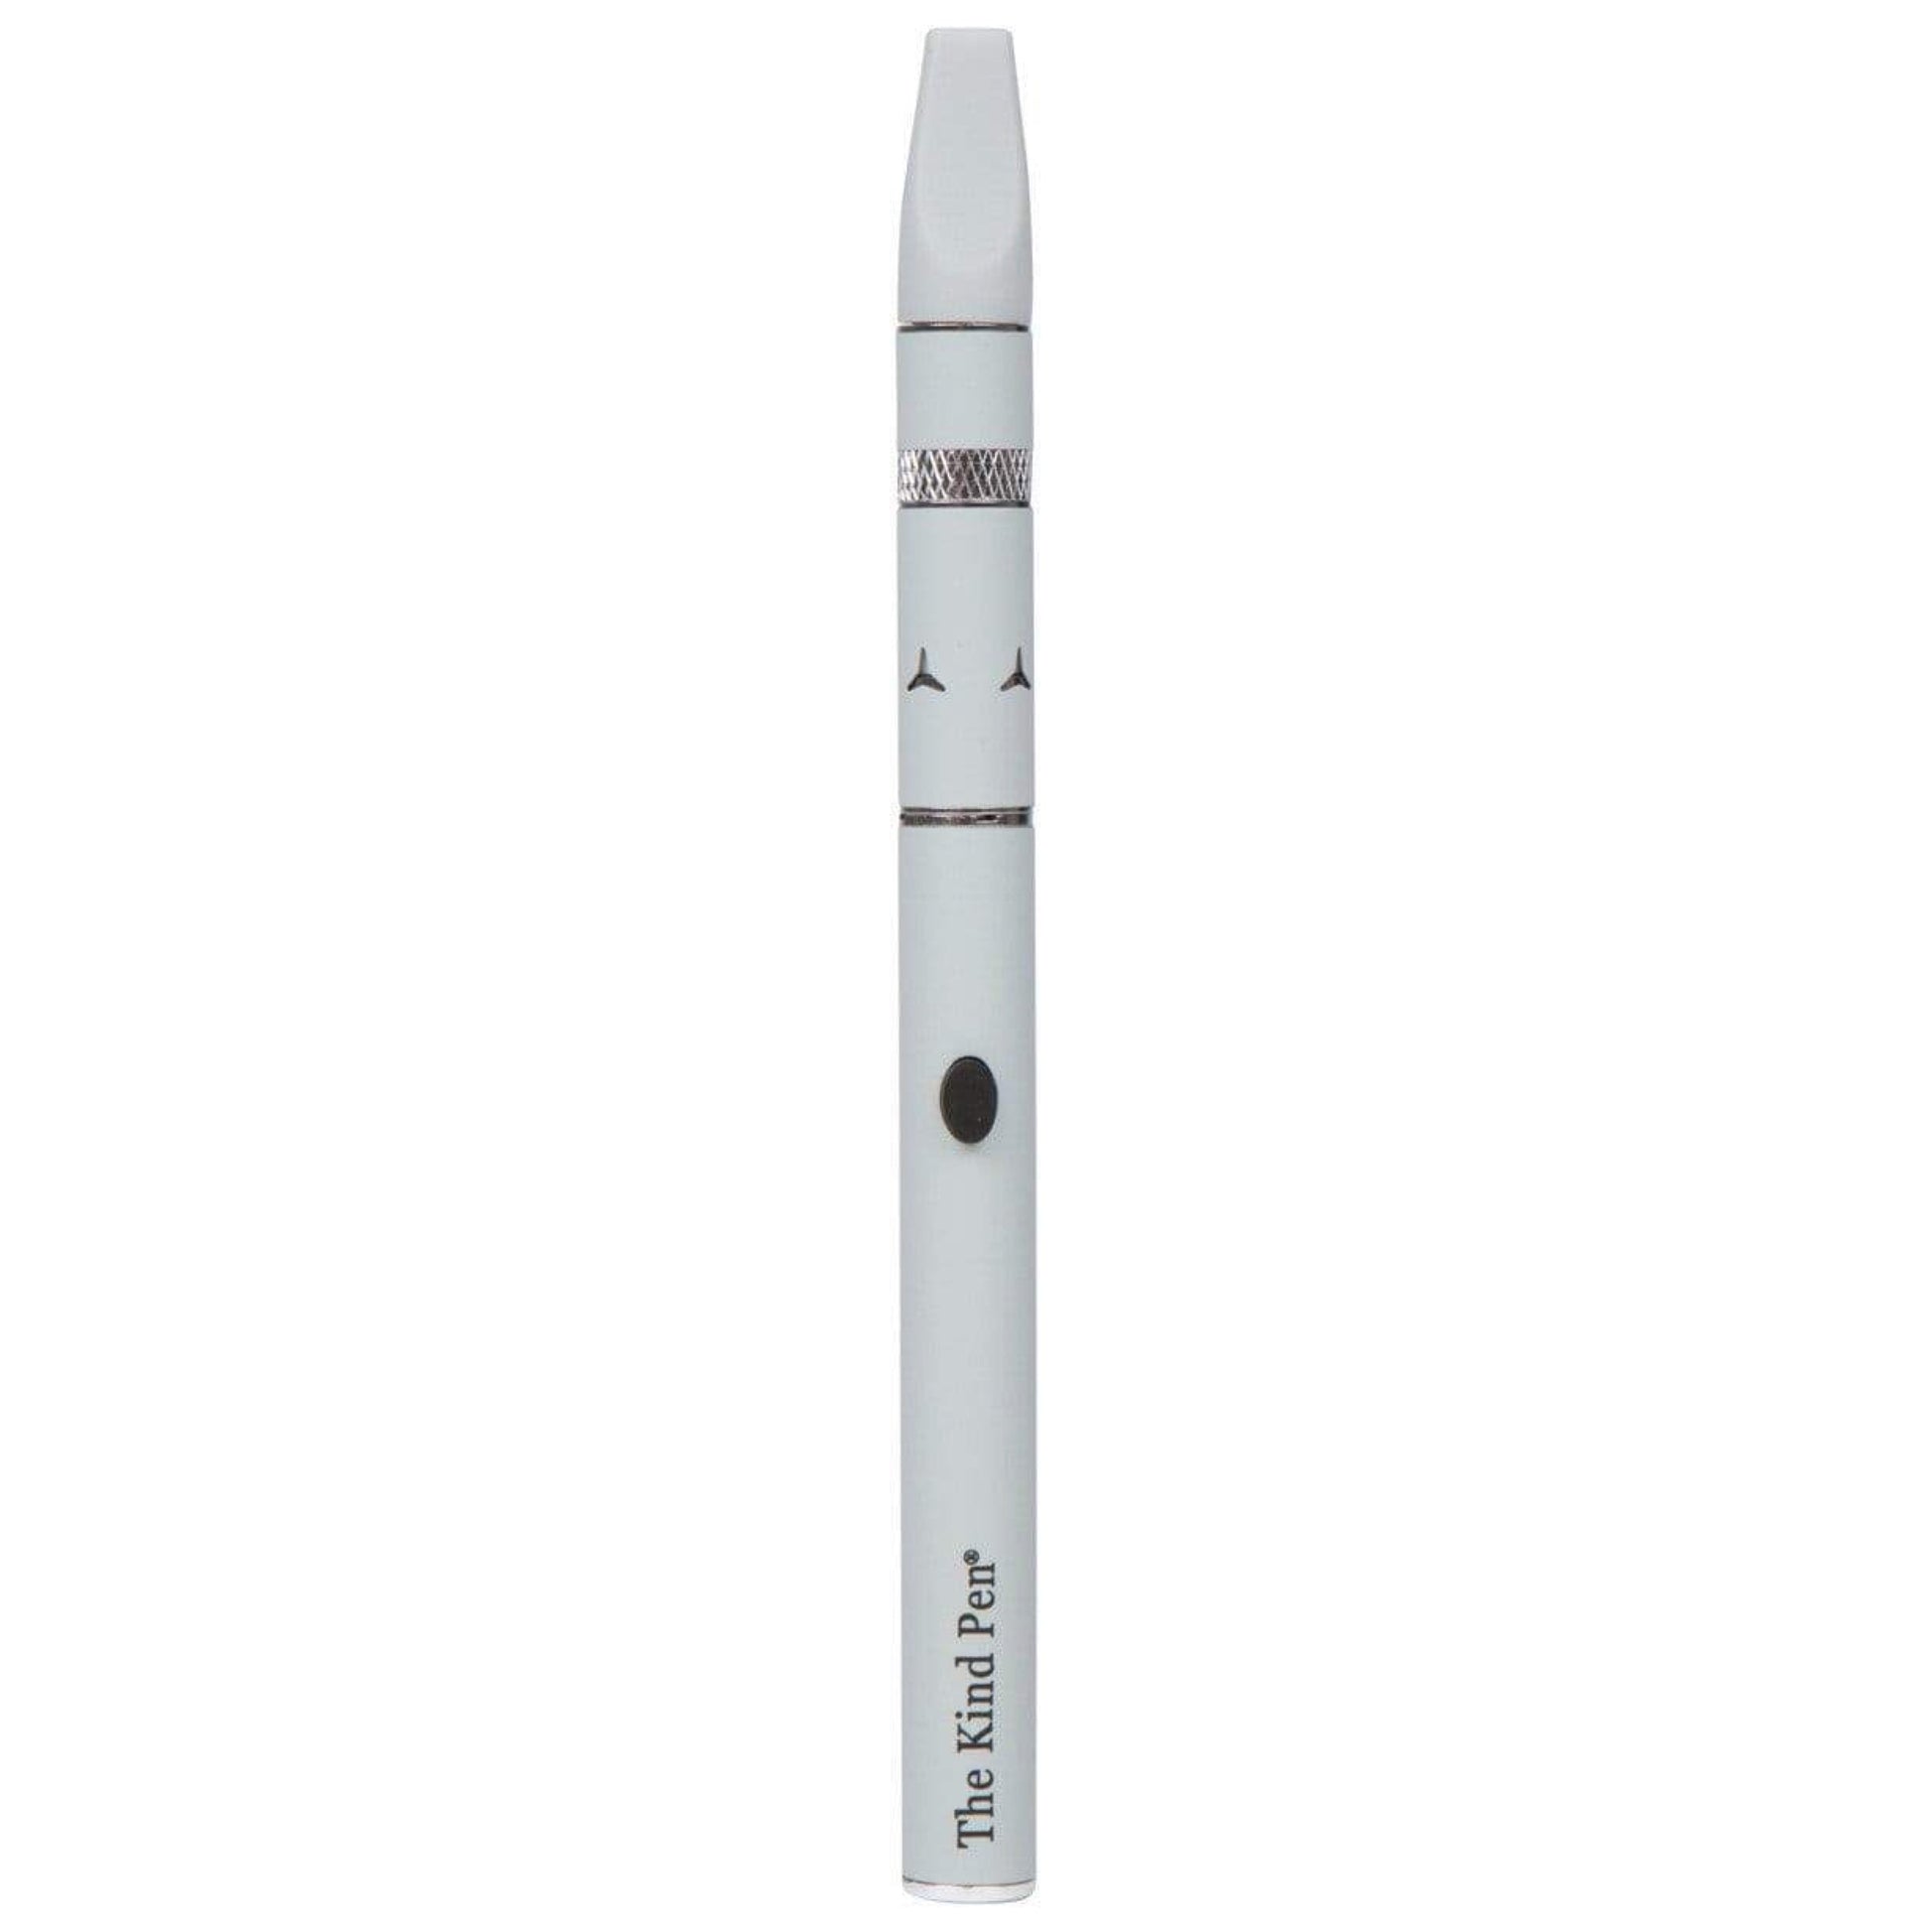 Kind Pen Slim Wax Vaporizer Pen